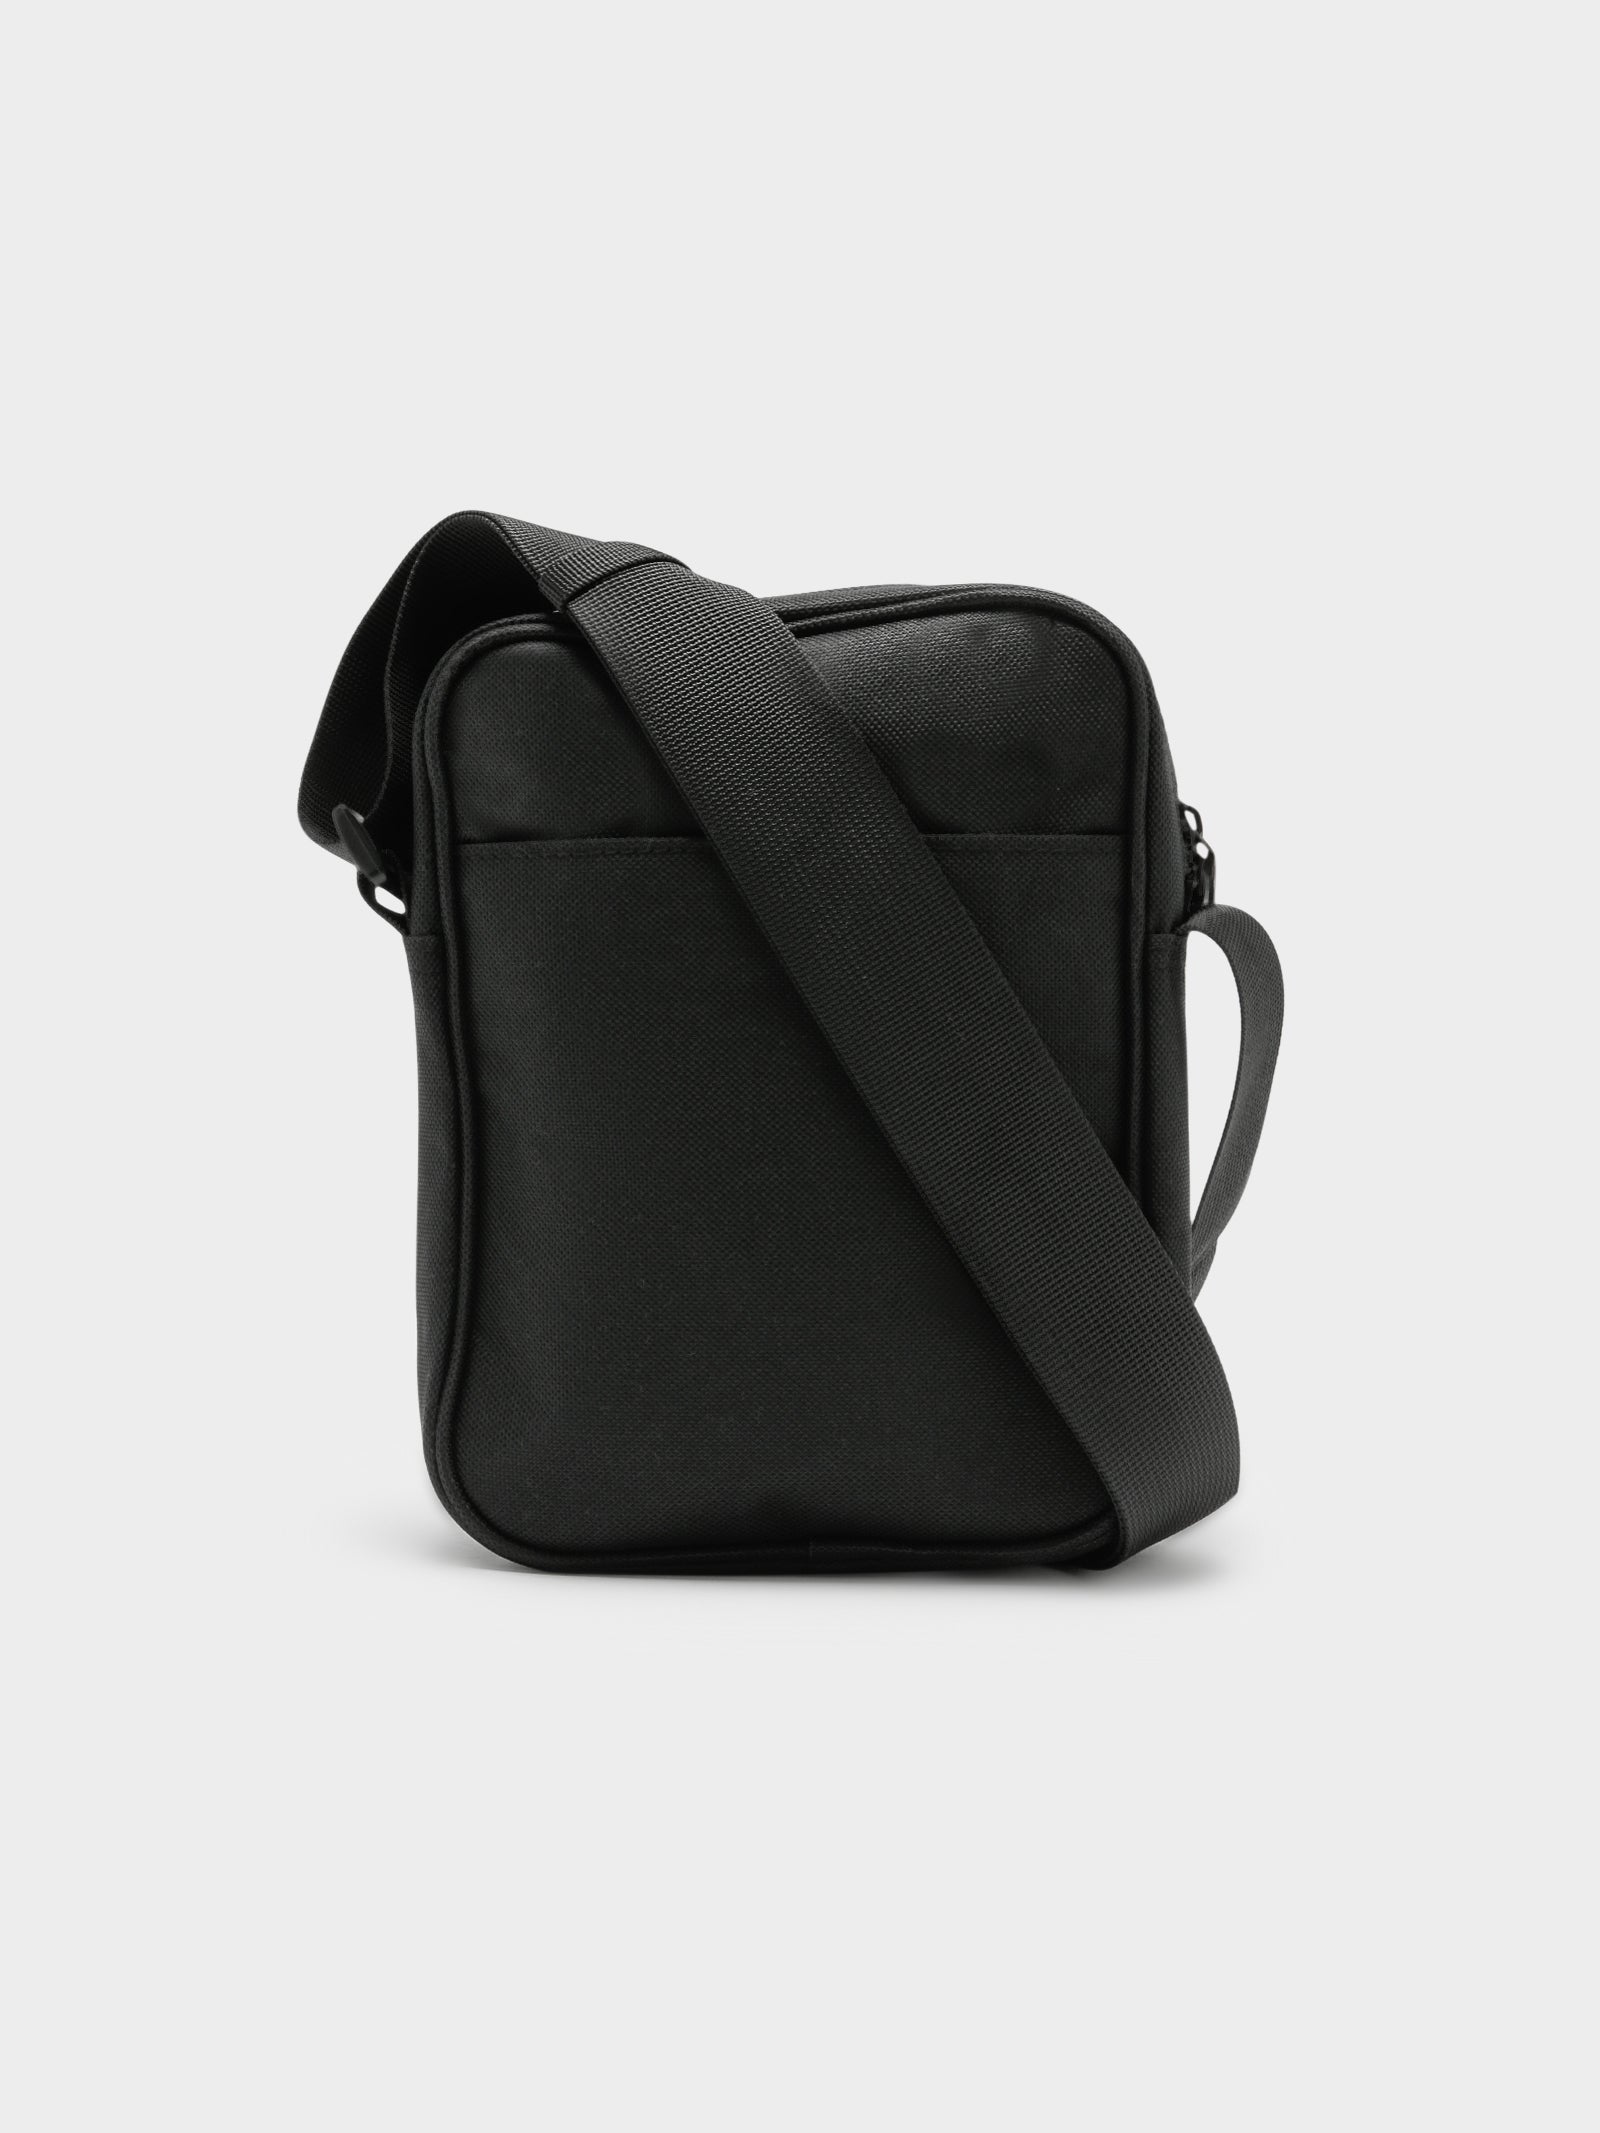 Workgear Pocket Bag in Black - Glue Store